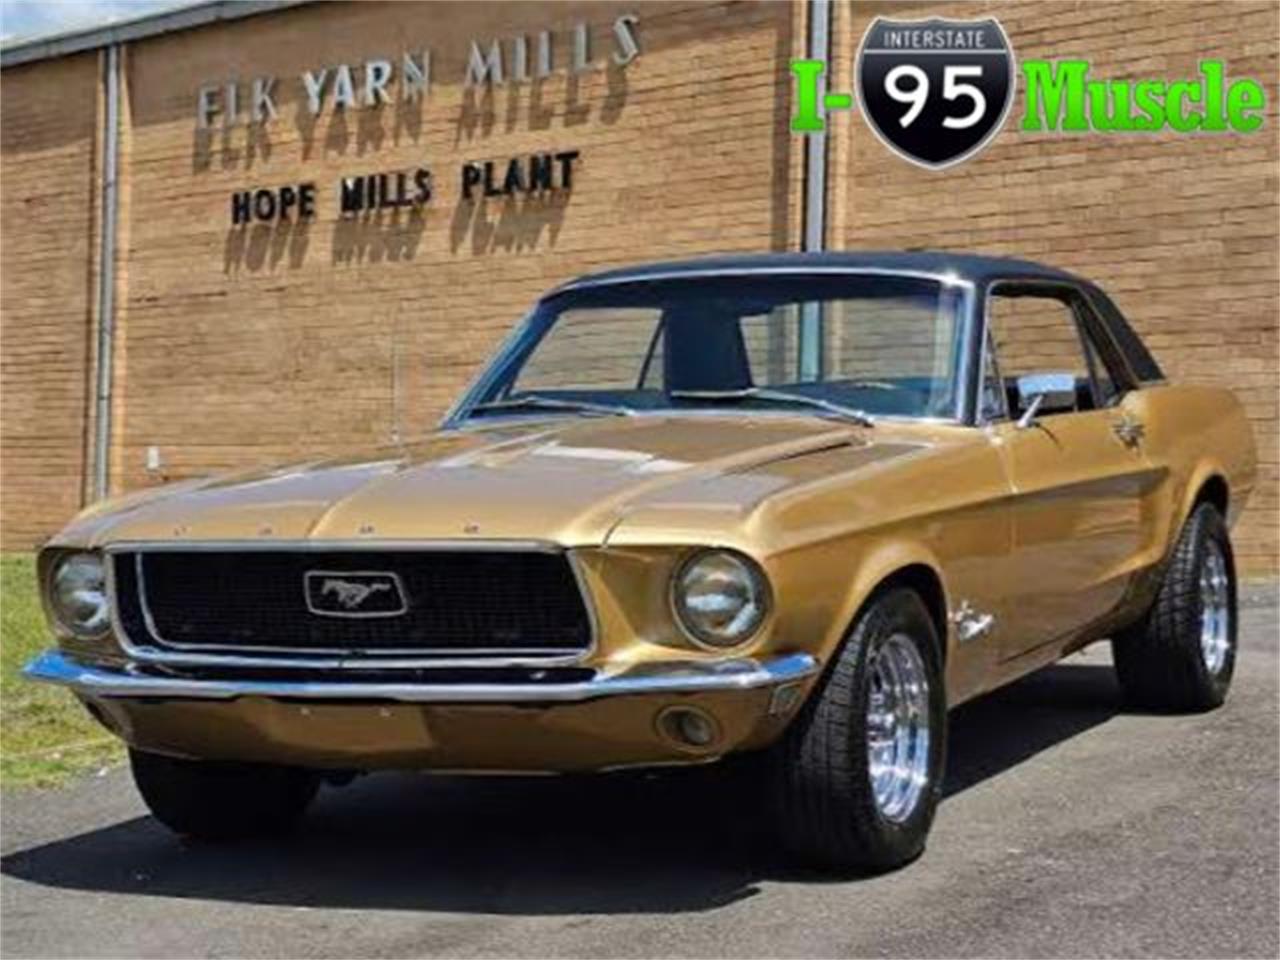 1968 Ford Mustang in Hope Mills, North Carolina